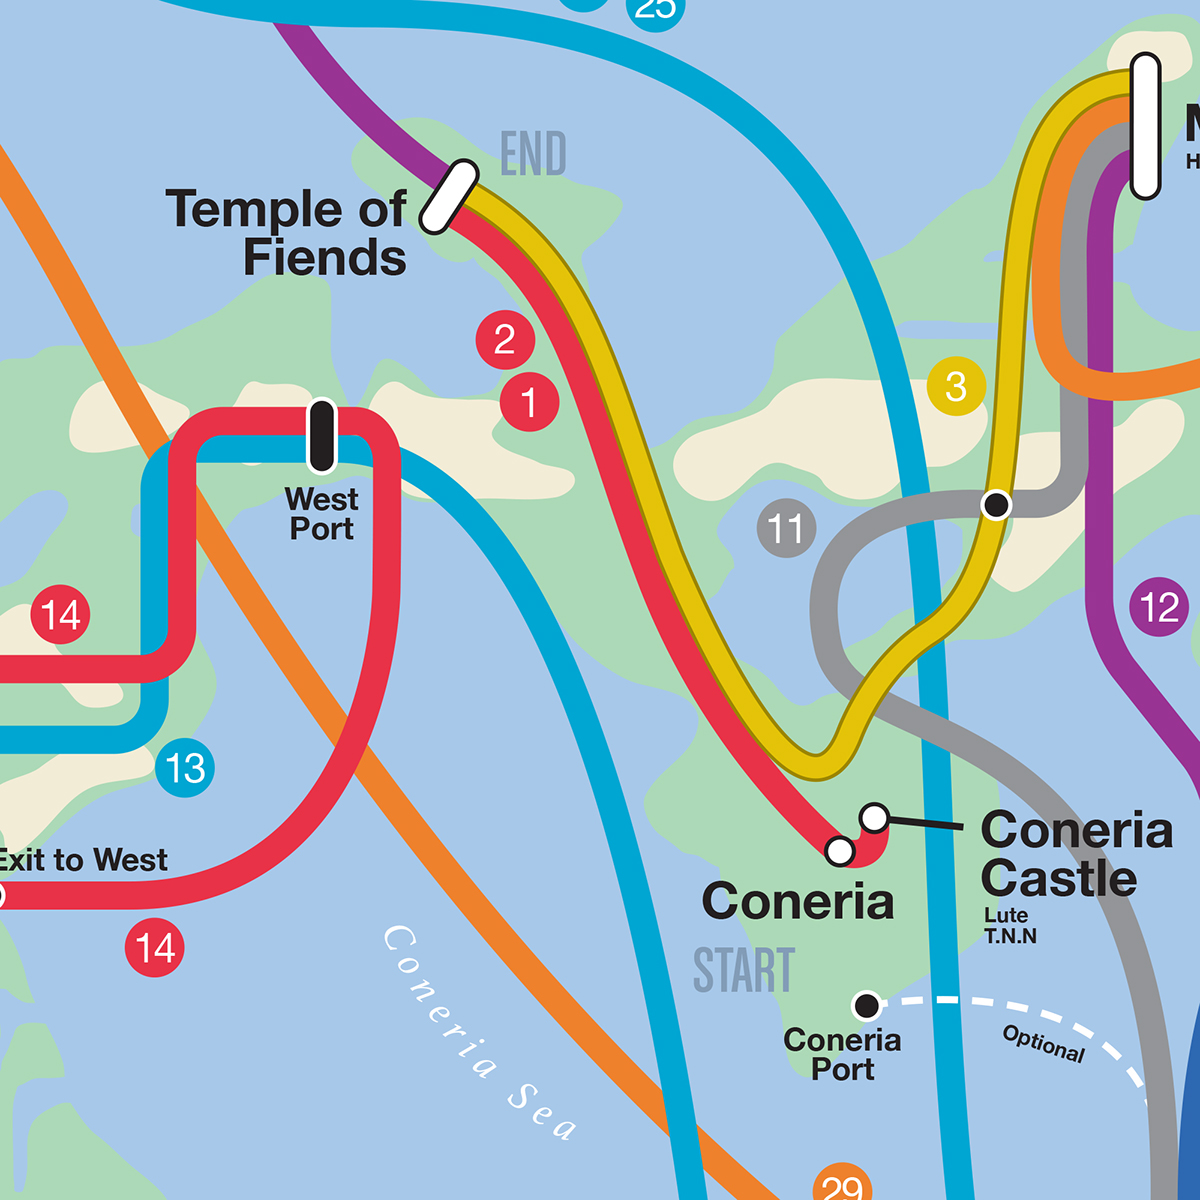 Nintendo subway Transit map NES video game Retro zelda final fantasy metroid metro underground system infographic